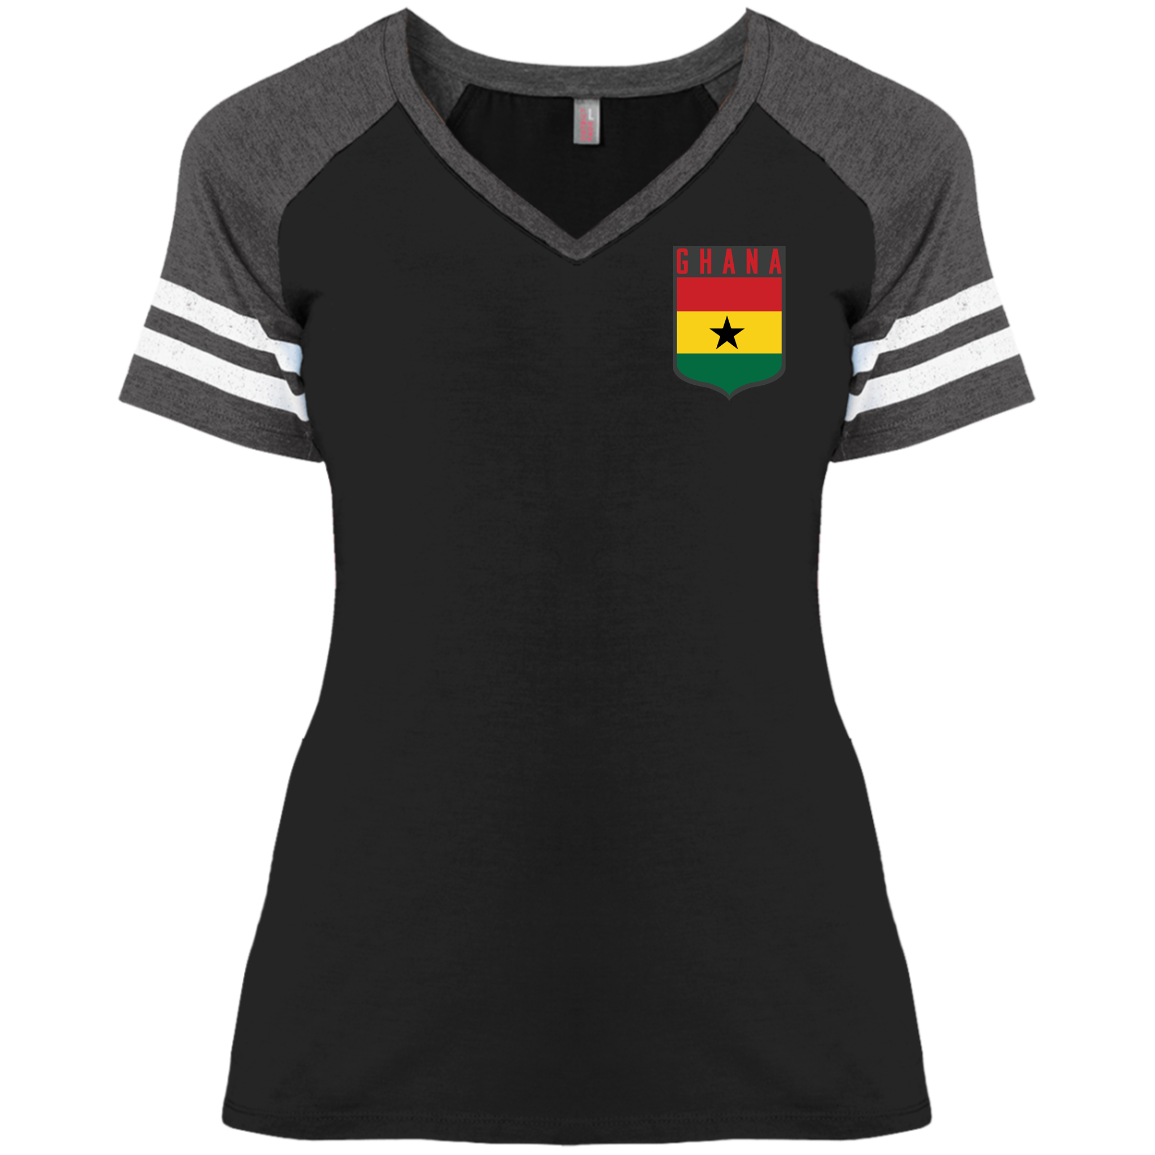 Ghana Football Team Emblem Women's Game V-Neck T-Shirt